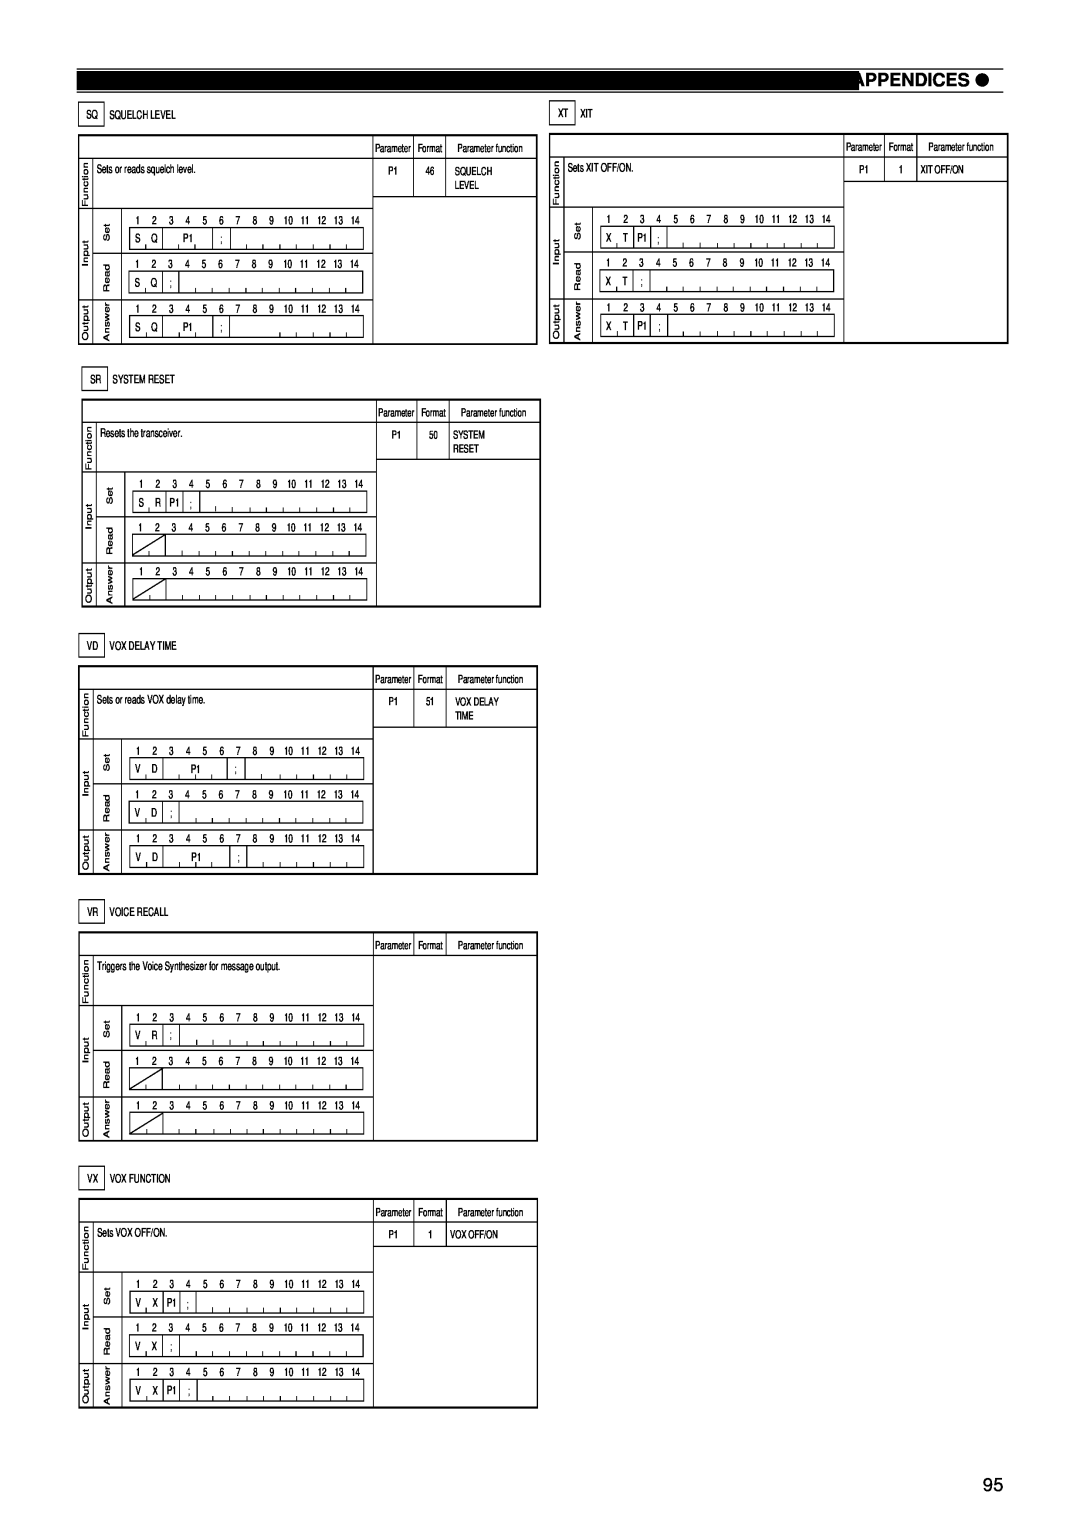 Kenwood TS-870S instruction manual Appendices, Parameter Format, Sets VOX OFF/ON 